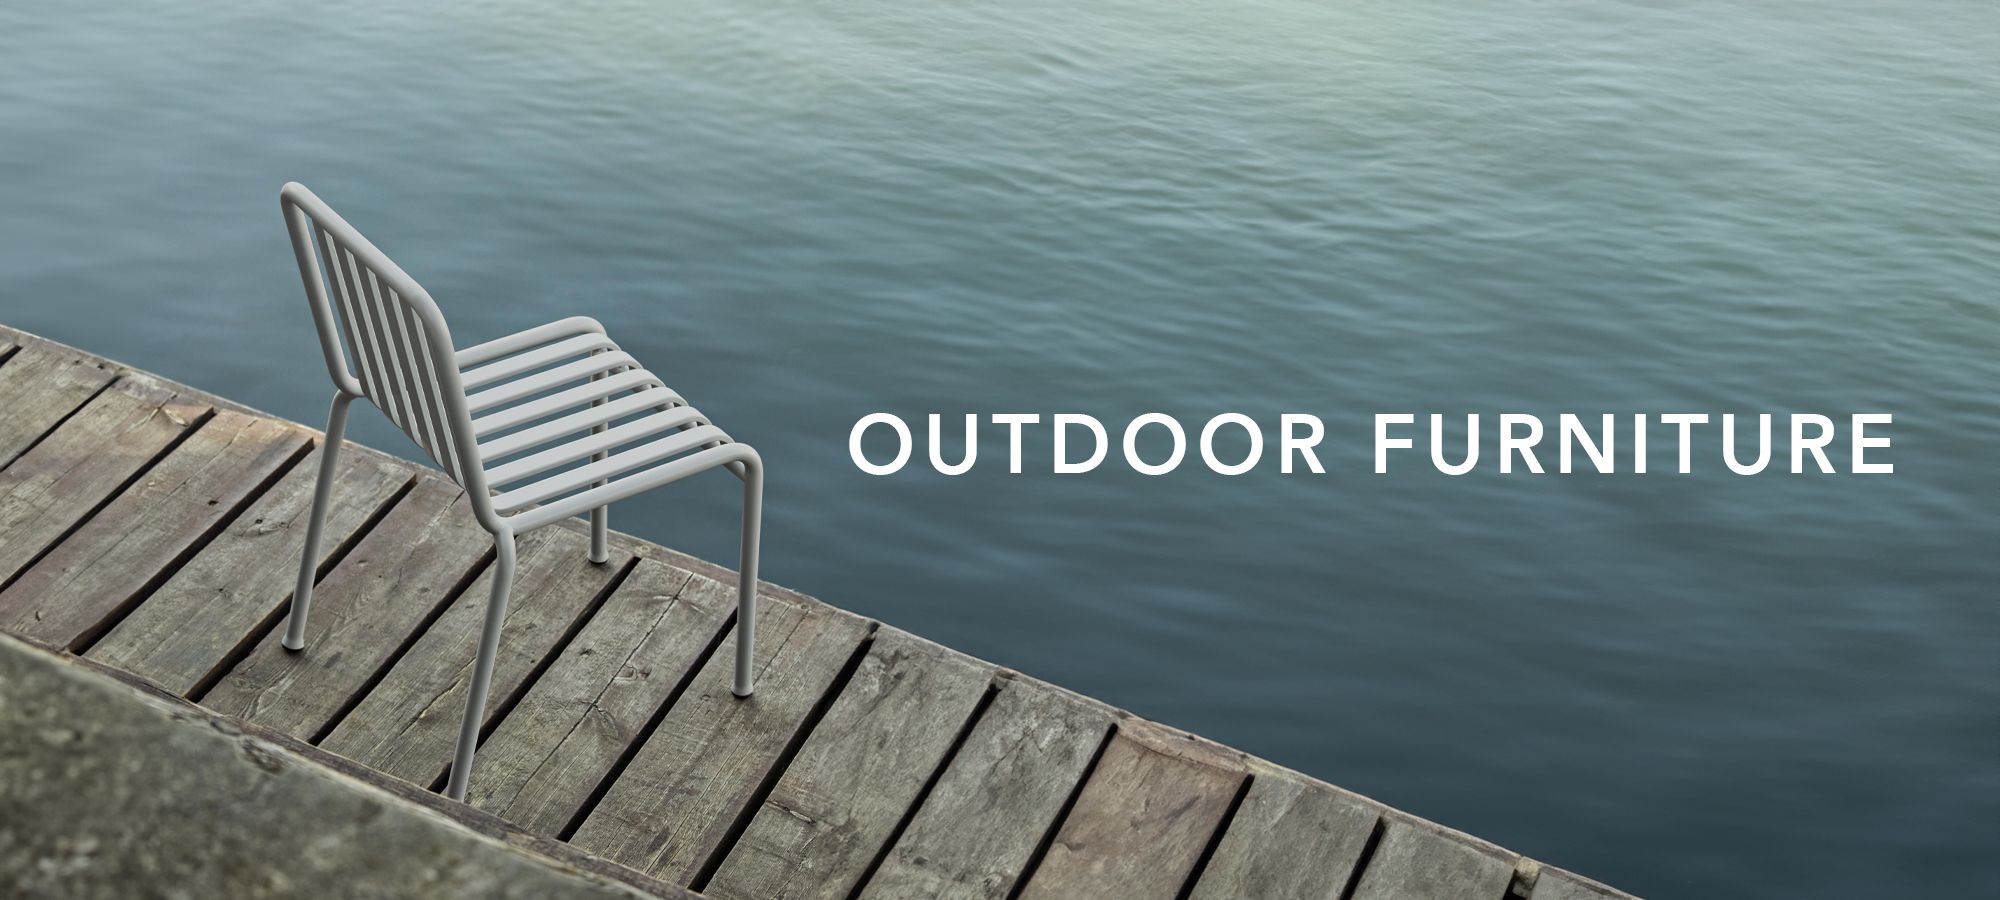 Outdoor Furniture at Byflou.com